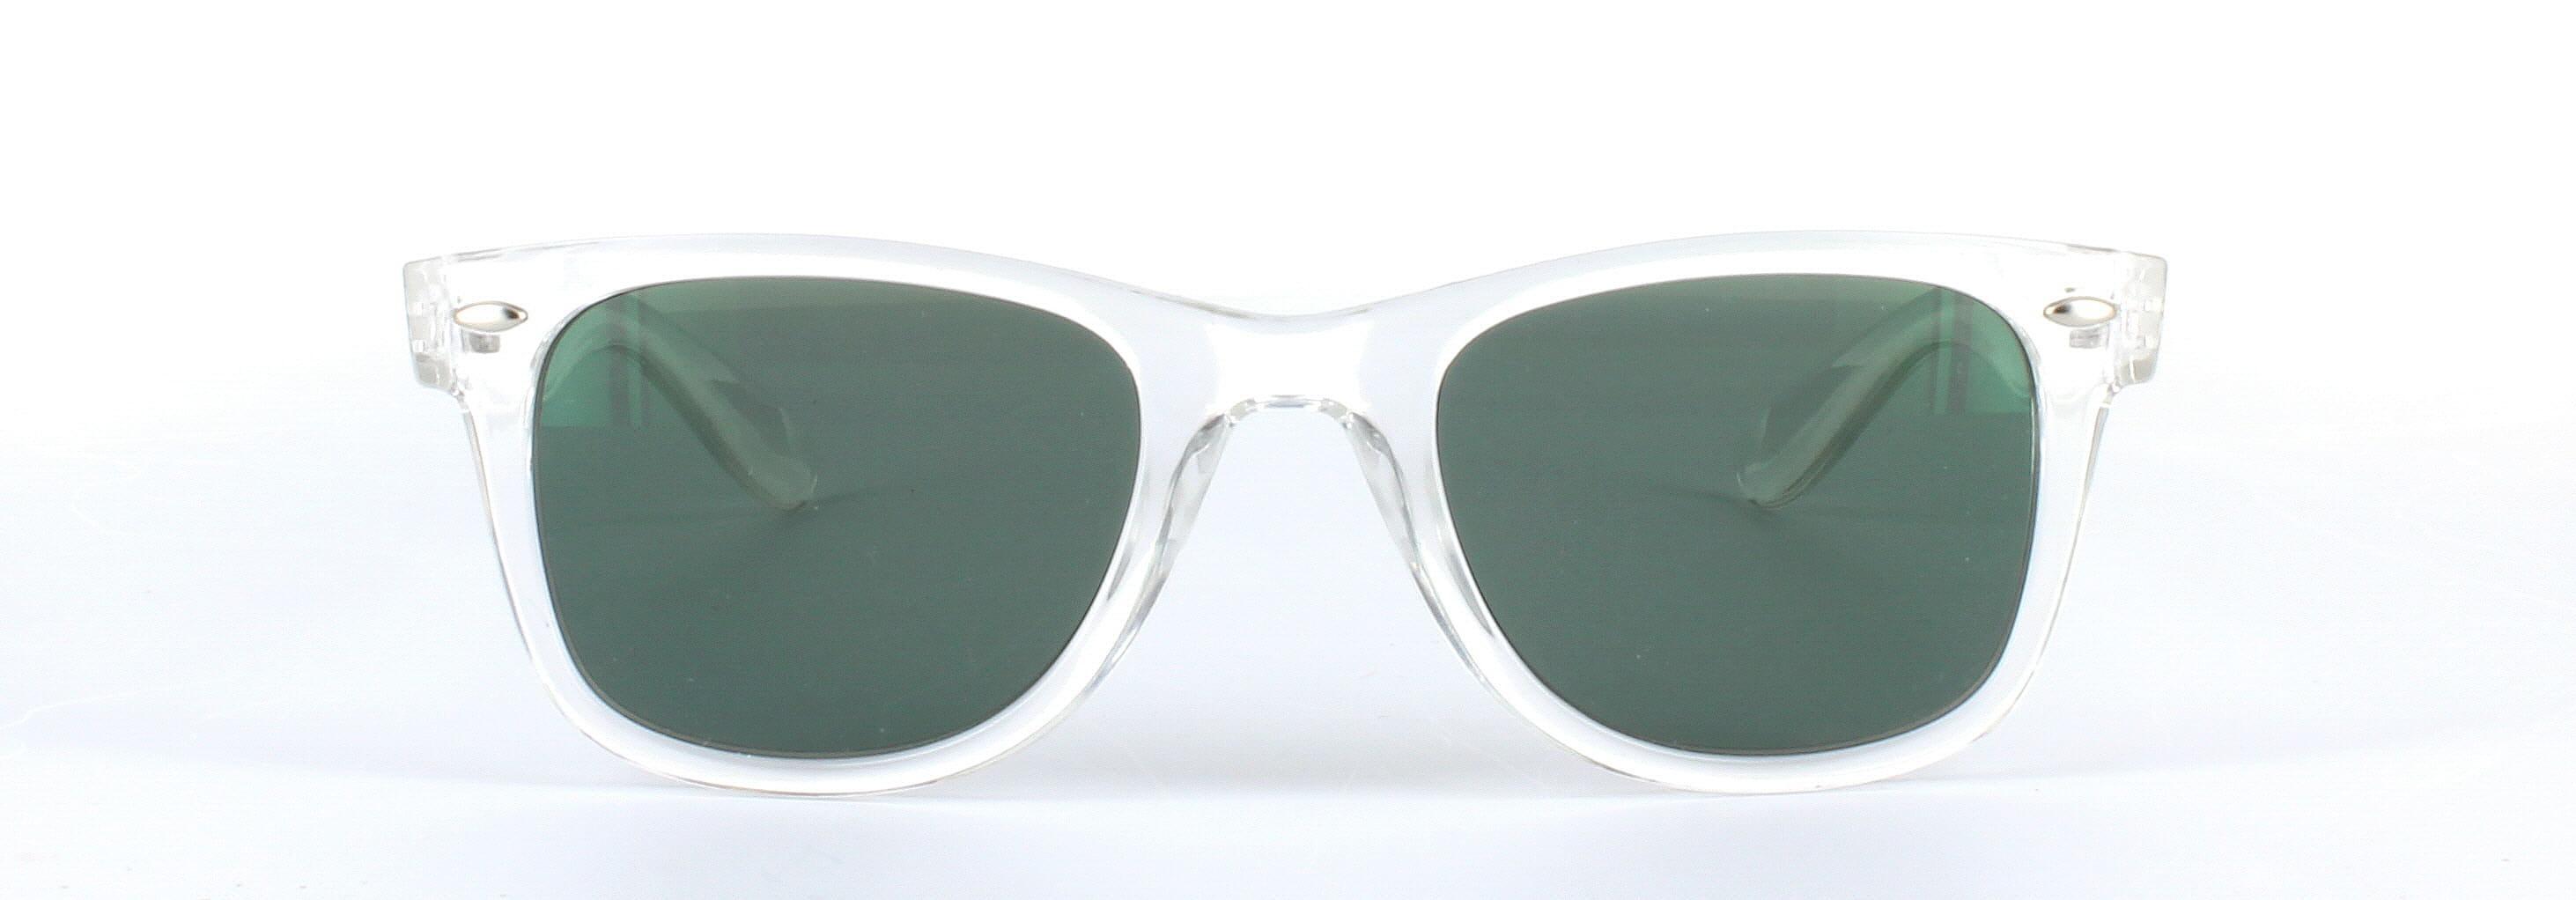 England Crystal Full Rim Plastic Sunglasses - Image View 5